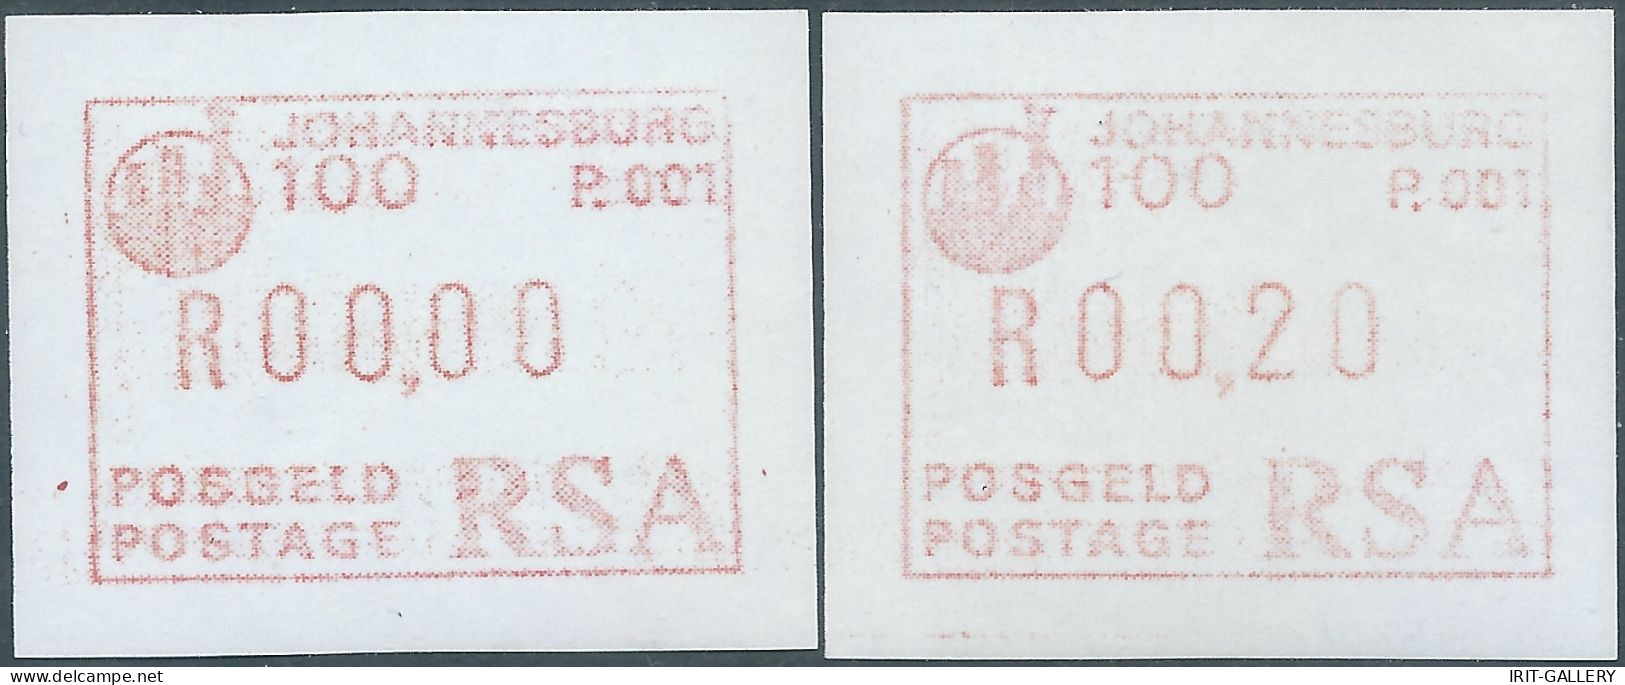 SOUTH AFRICA-AFRIQUE DU SUD-SUD AFRICA,JOHANNESBURG 1986-1987 TWO Frame Label Stamp(RSA)SIMPLE CARD,MNH - Neufs